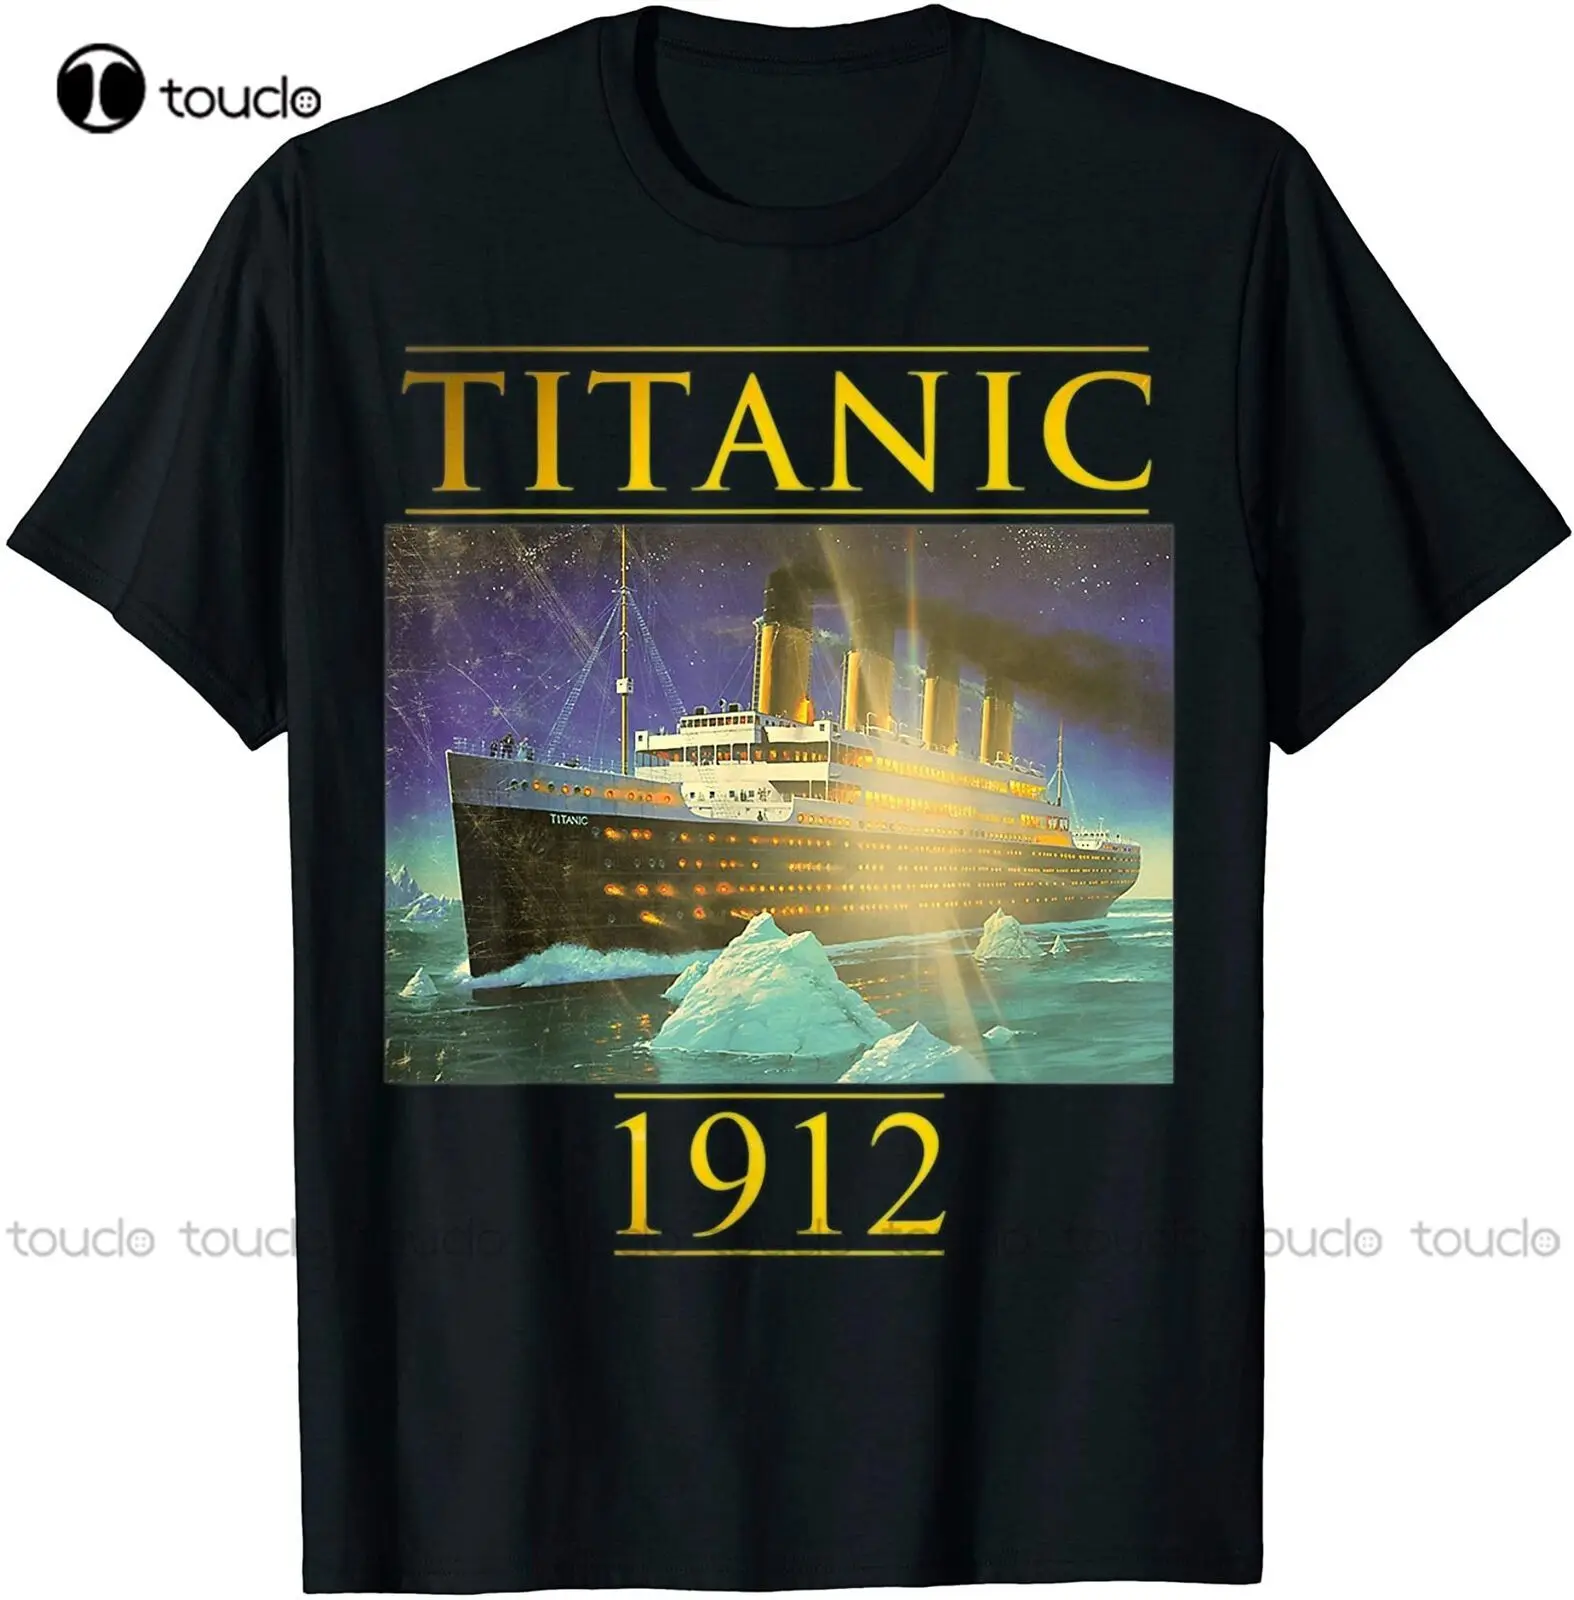 

Titanic Tshirt Sailing Ship Vintage Cruis Vessel 1912 Gift T-Shirt Birthday Gift Unisex Women Men Tee Shirt